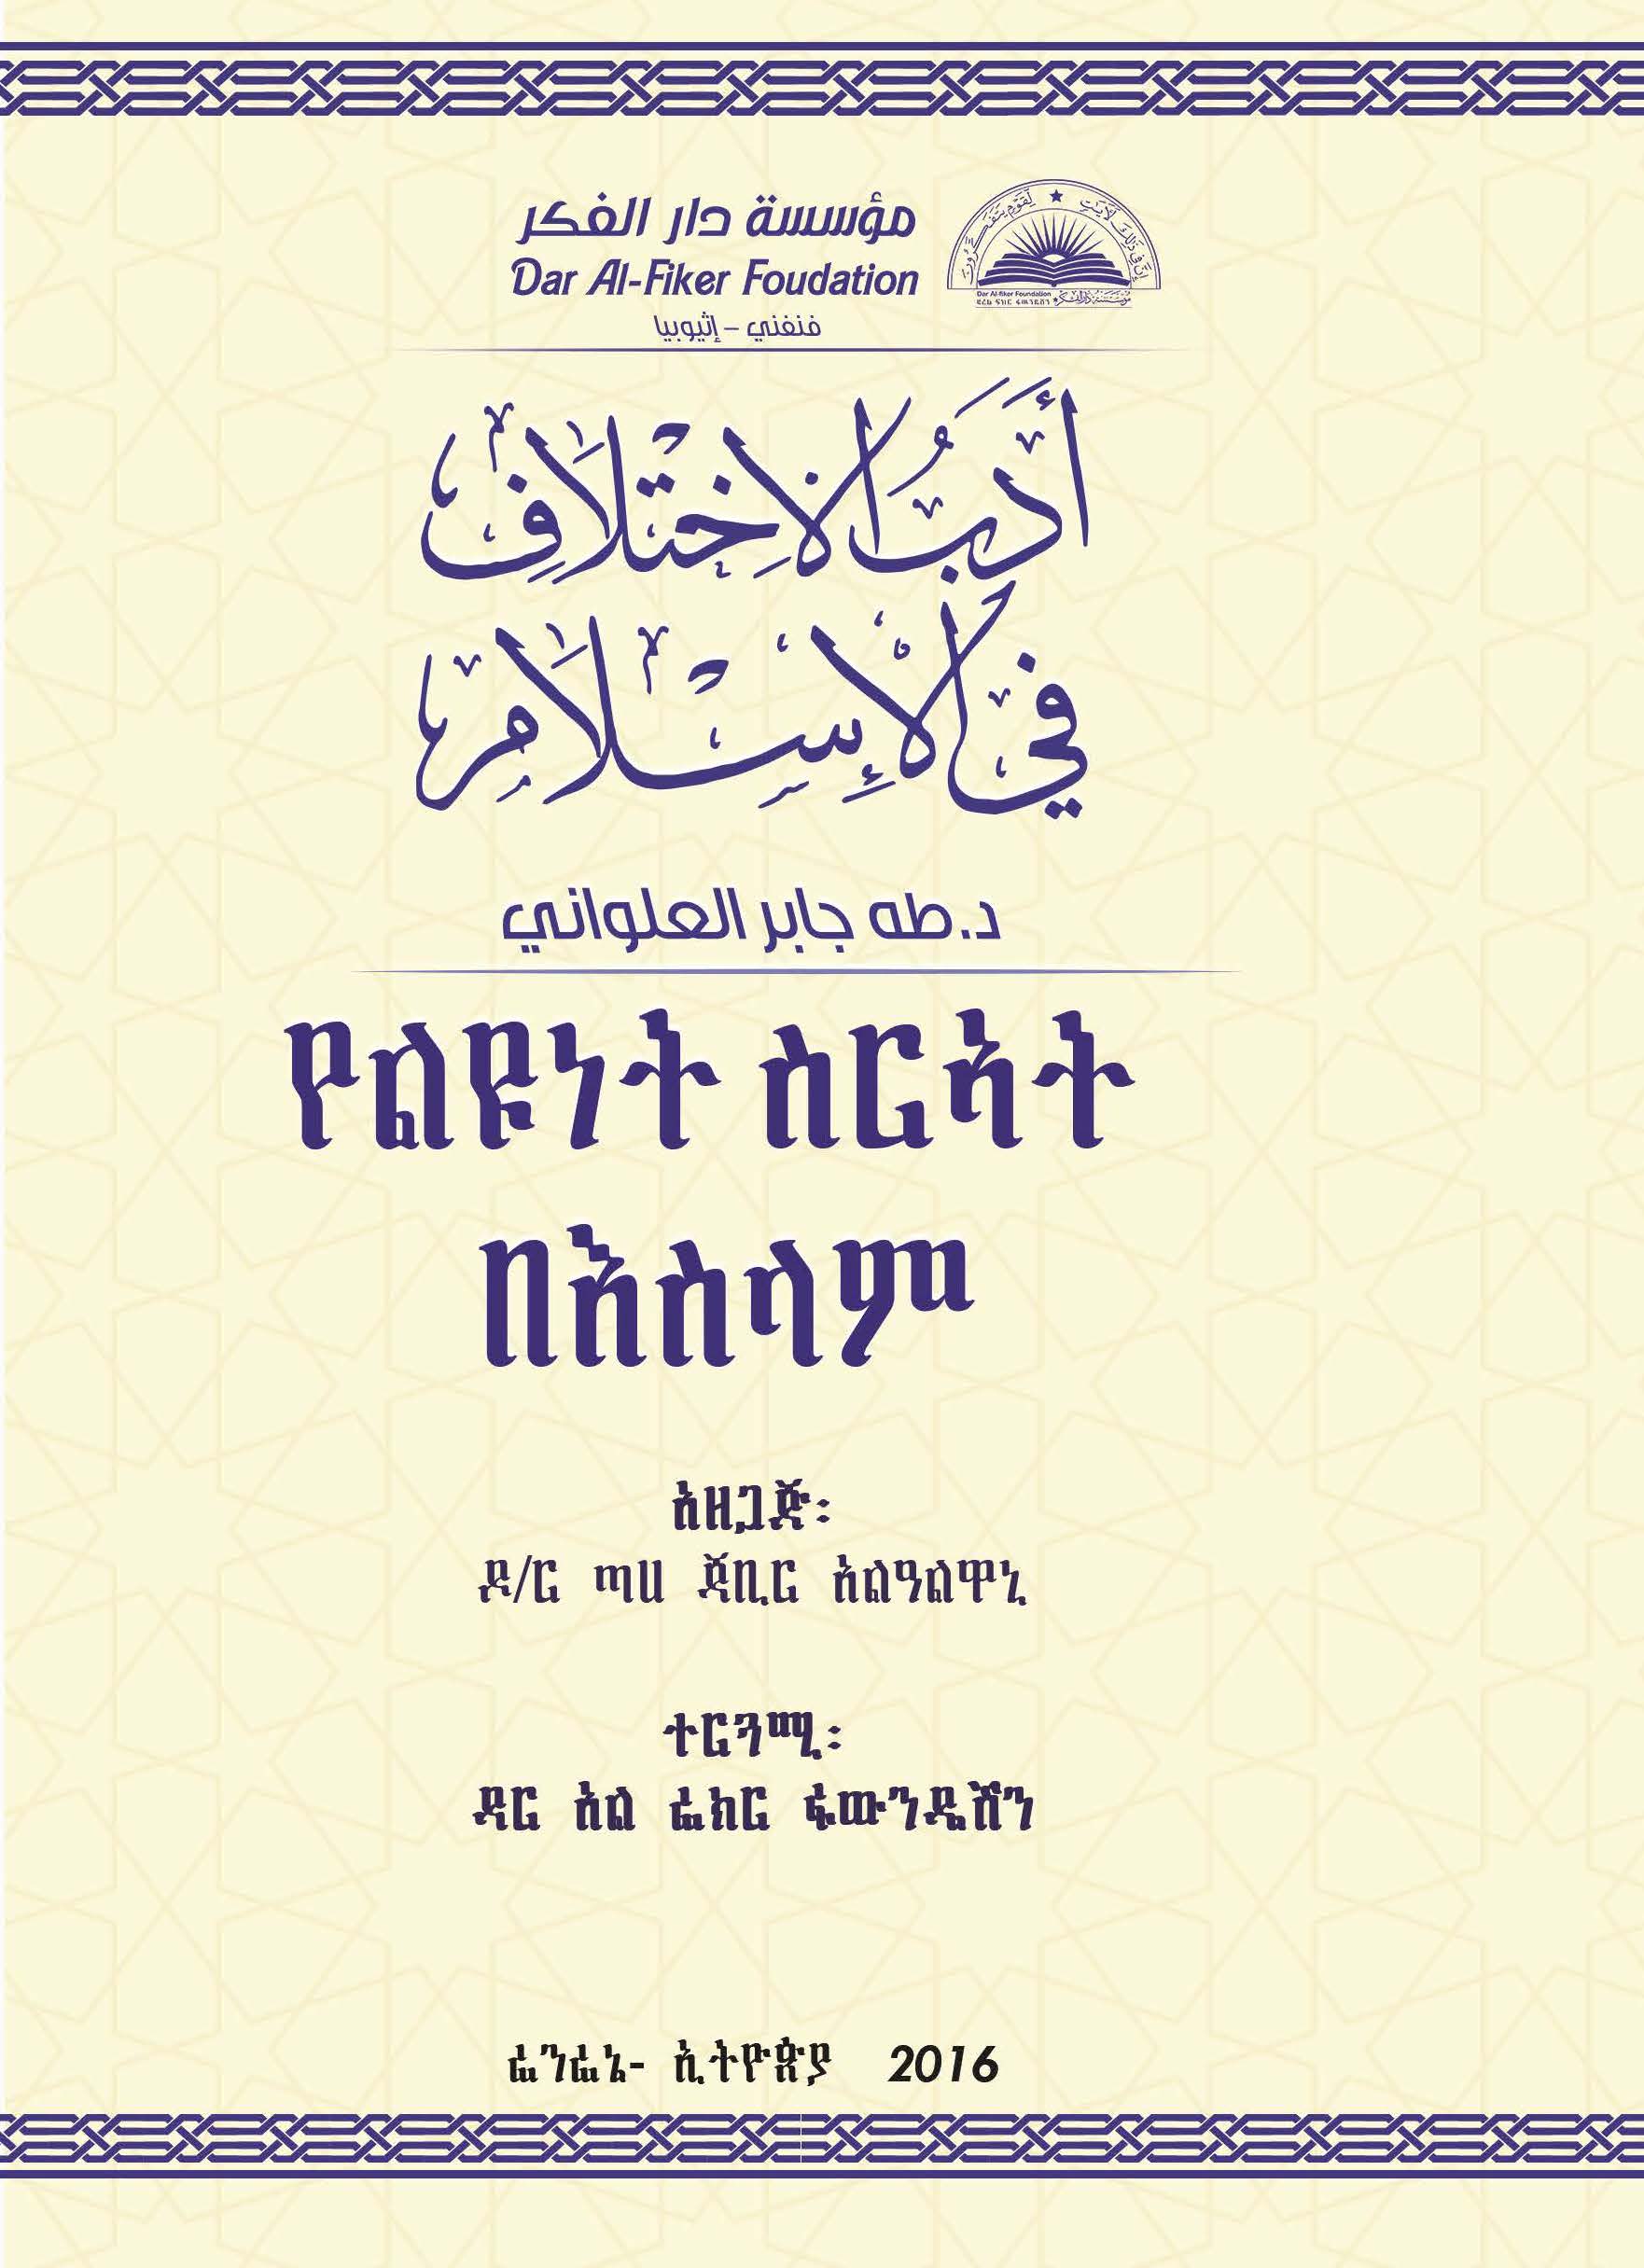 Amharic: በእስልምና ውስጥ ያሉ ልዩነቶች (adab aliakhtilaf fi al’iislam)